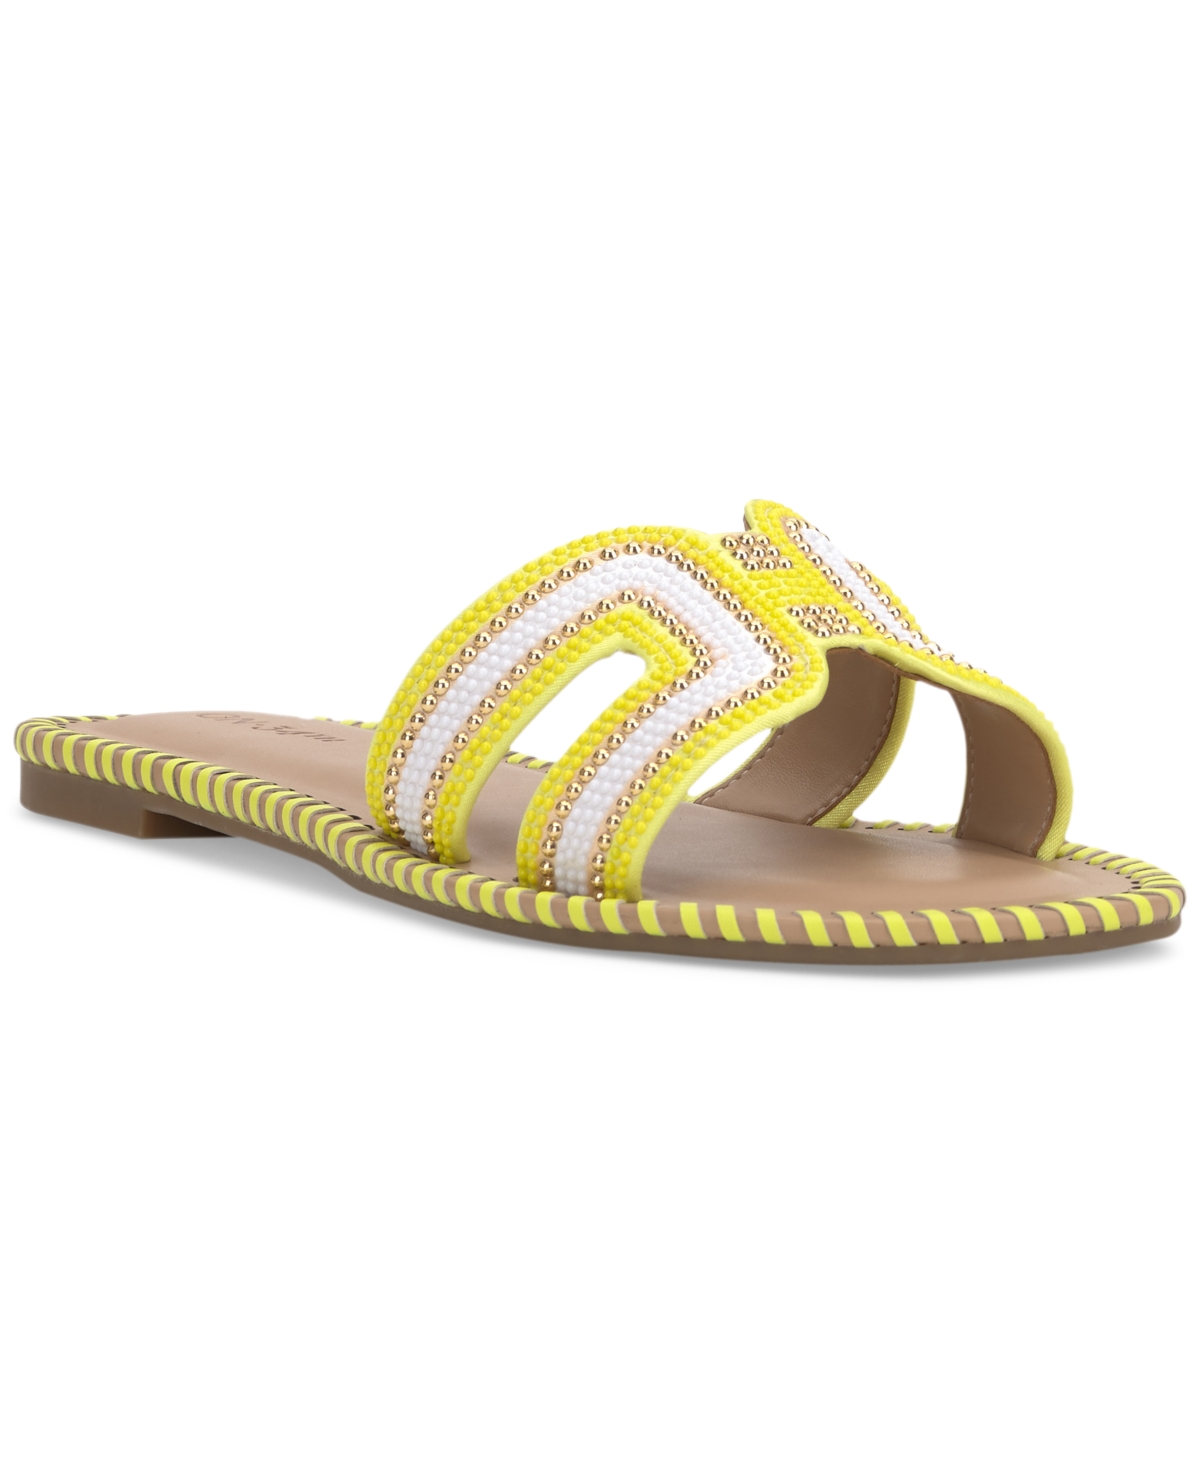 Women's Mansi Beaded H-Band Flat Sandals, Created for Macy's - Citron/White Beaded